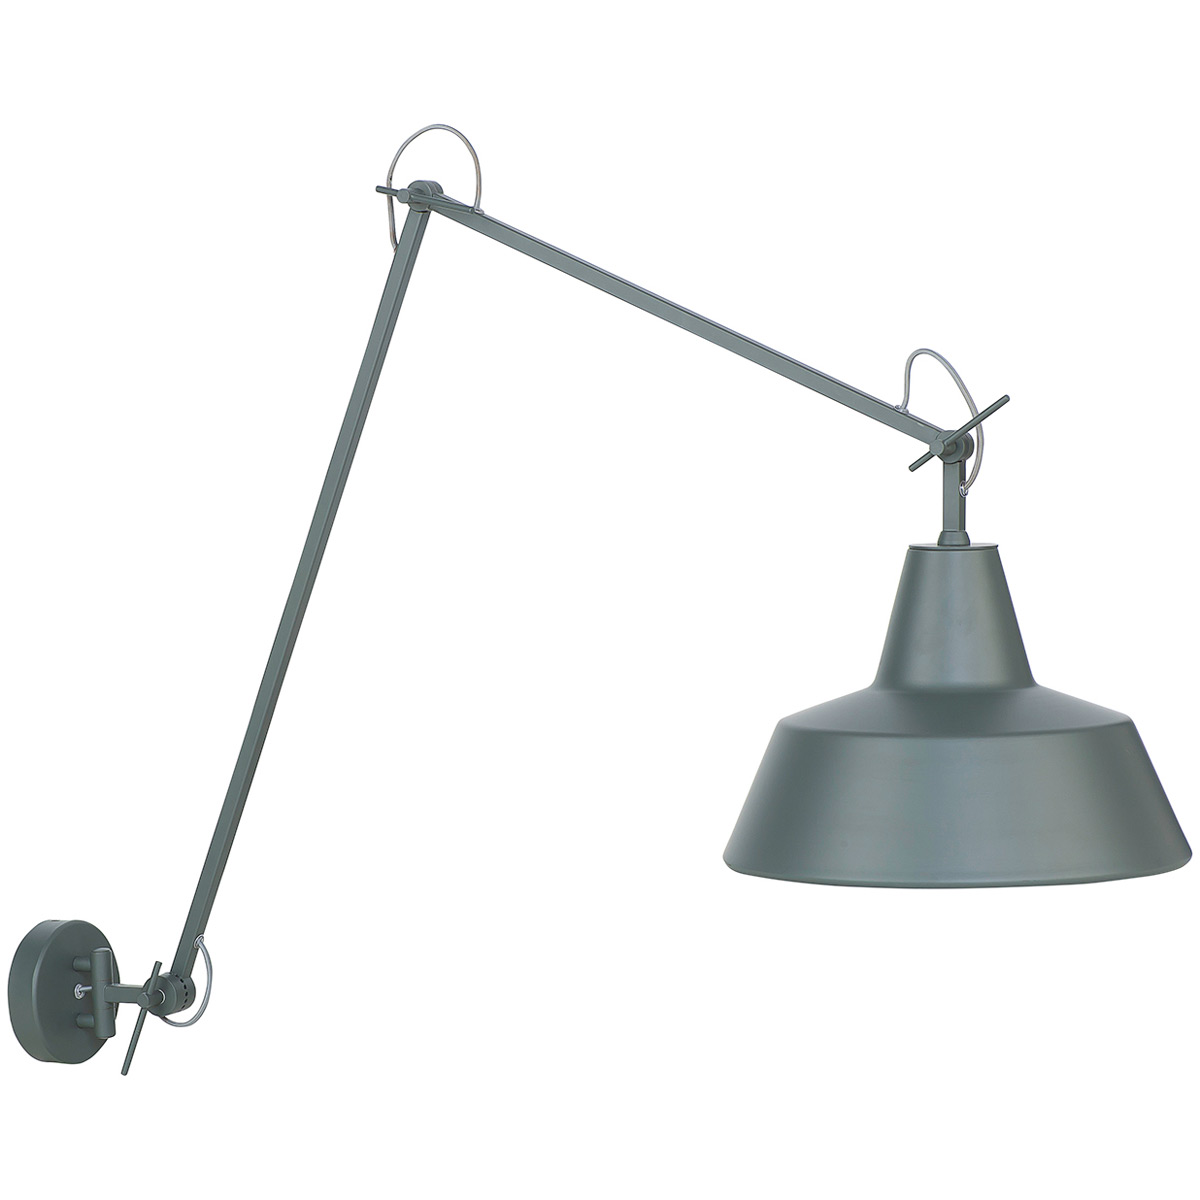 Grau-grüne Ausführung der Loft-style Gelenkwandlampe